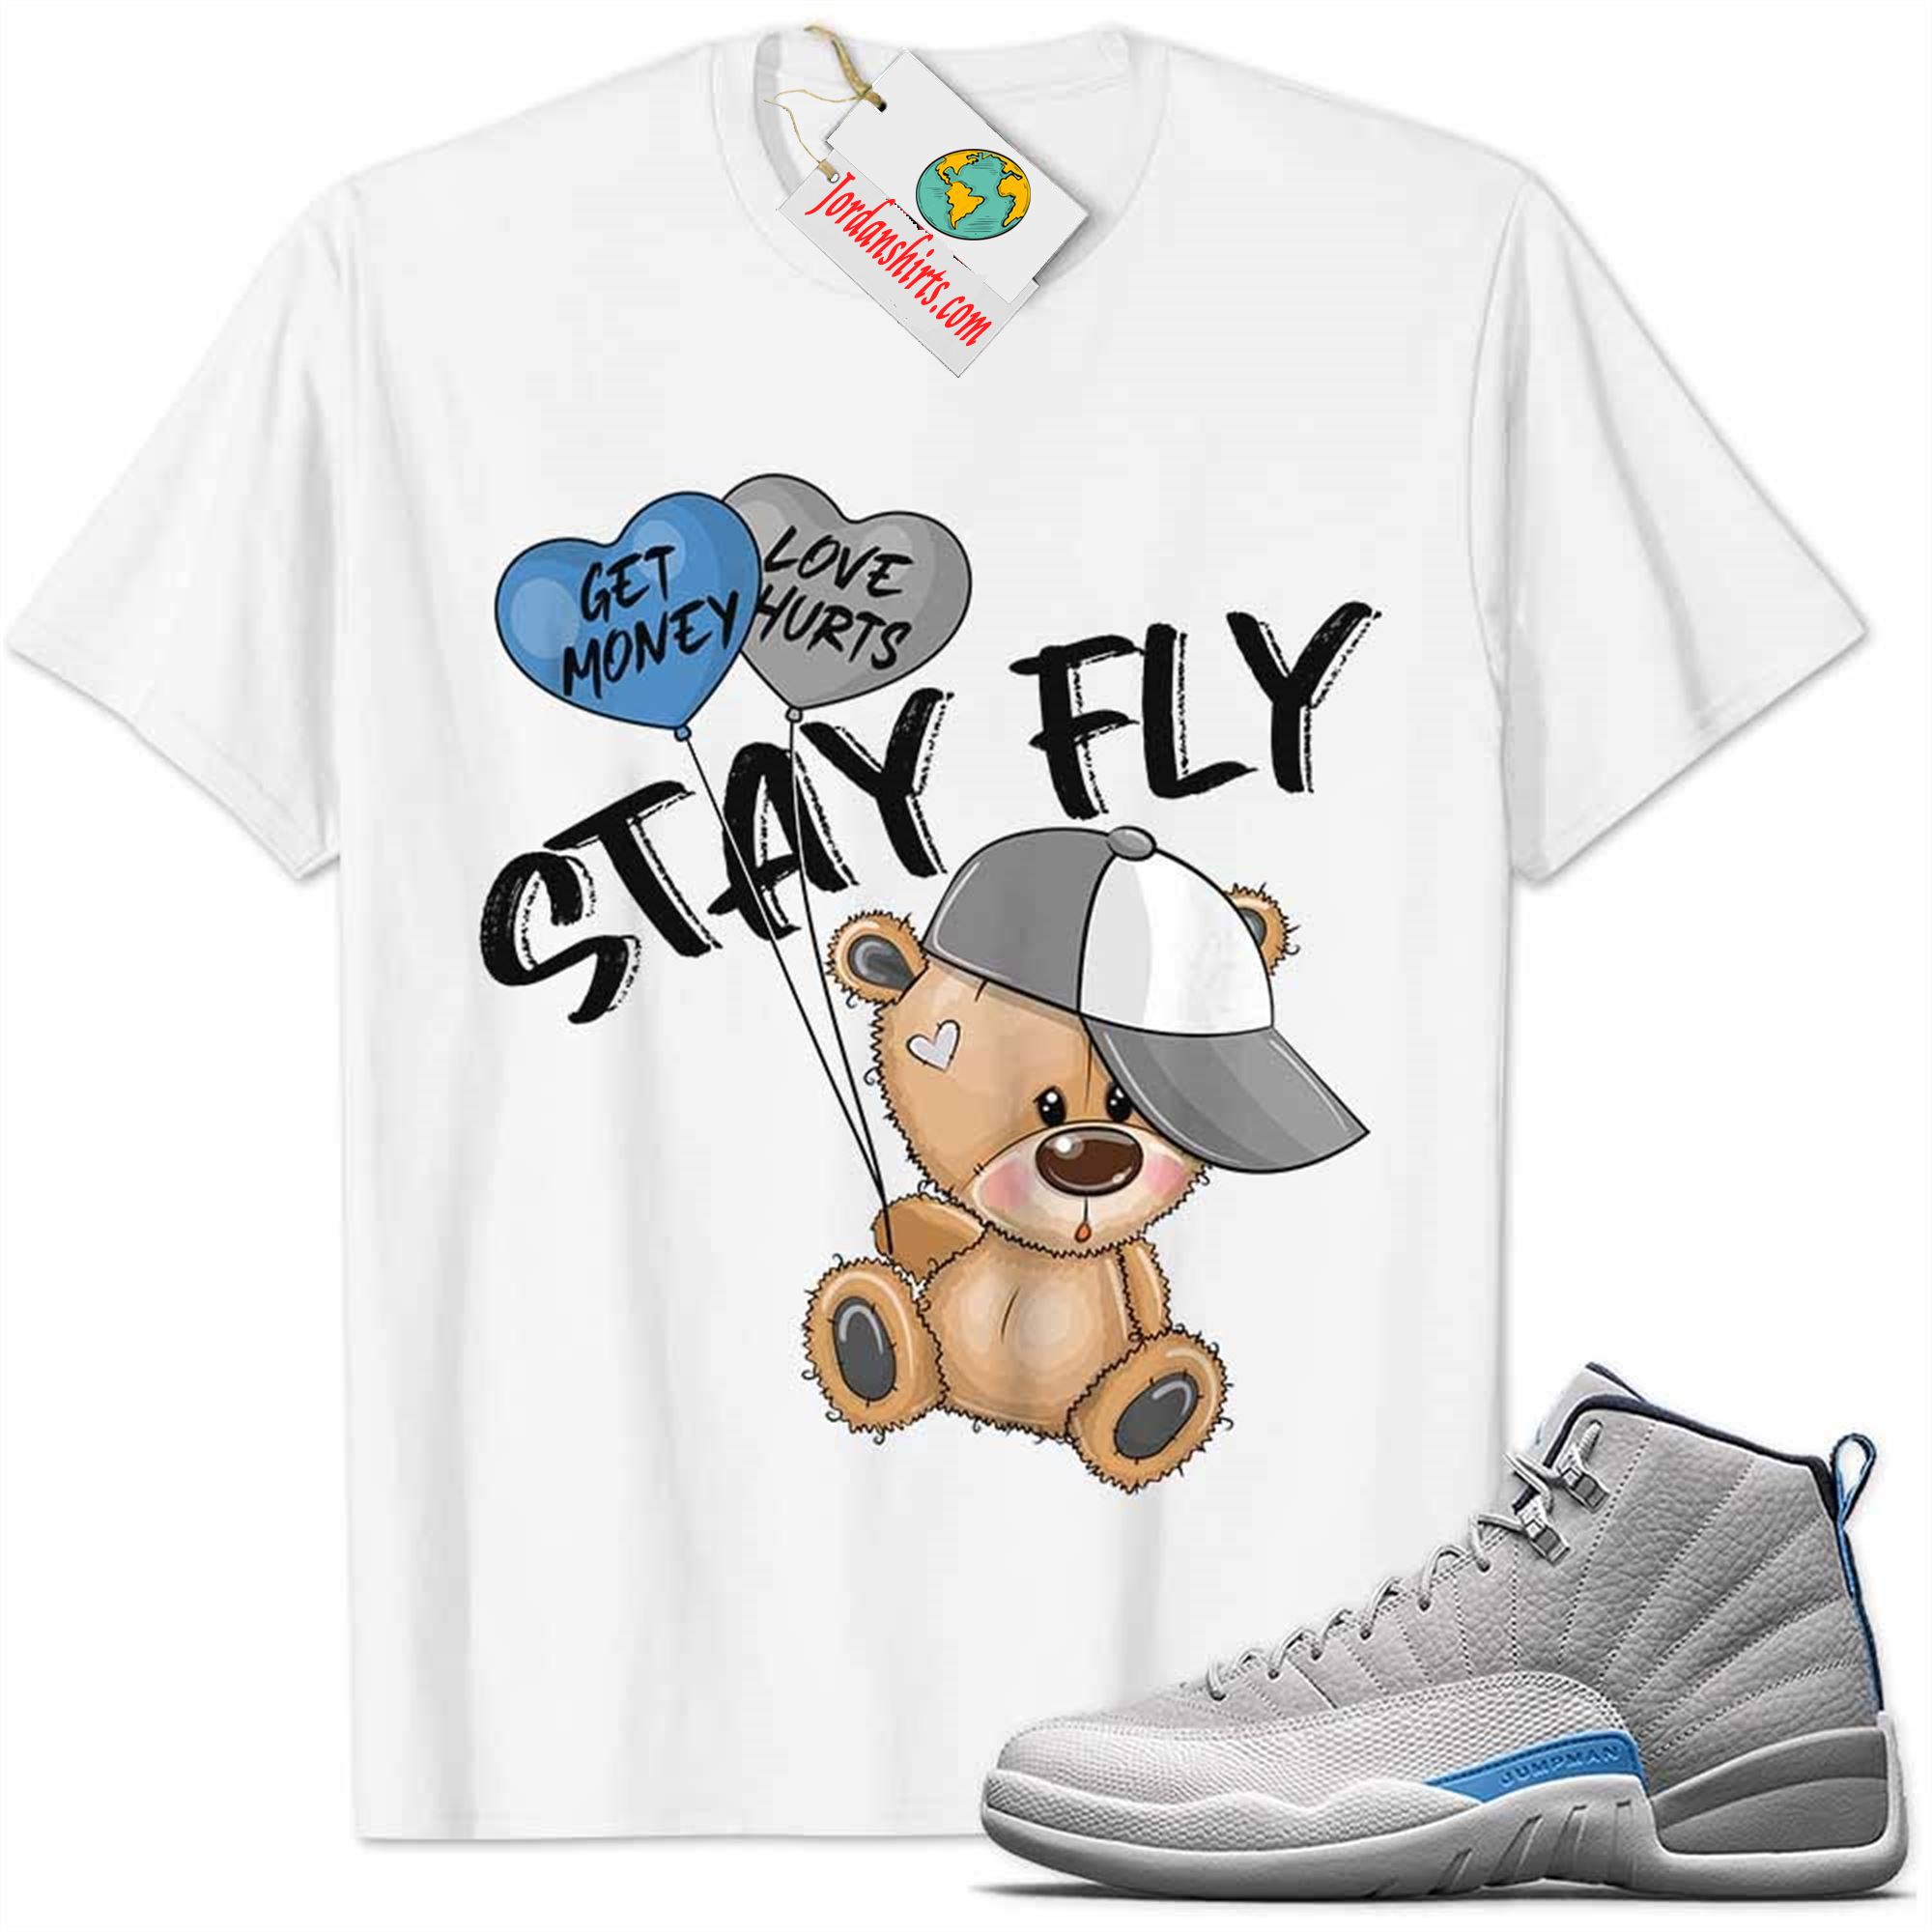 Jordan 12 Shirt, Wolf Grey 12s Shirt Cute Teddy Bear Stay Fly Get Money White Full Size Up To 5xl